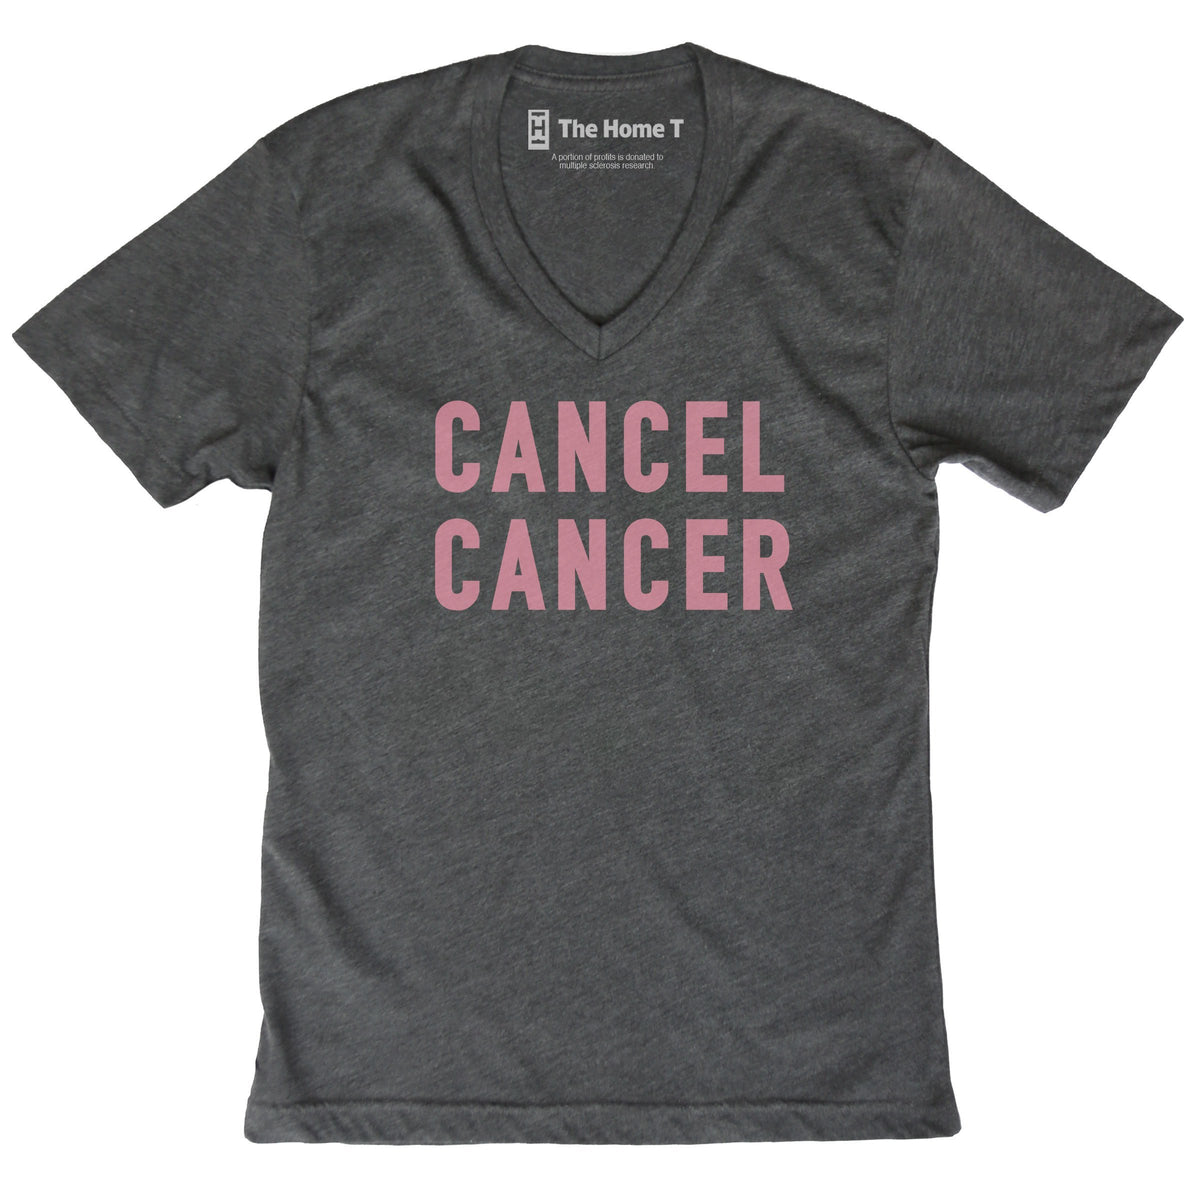 Cancel Cancer The Home T XS V-Neck Dark Grey